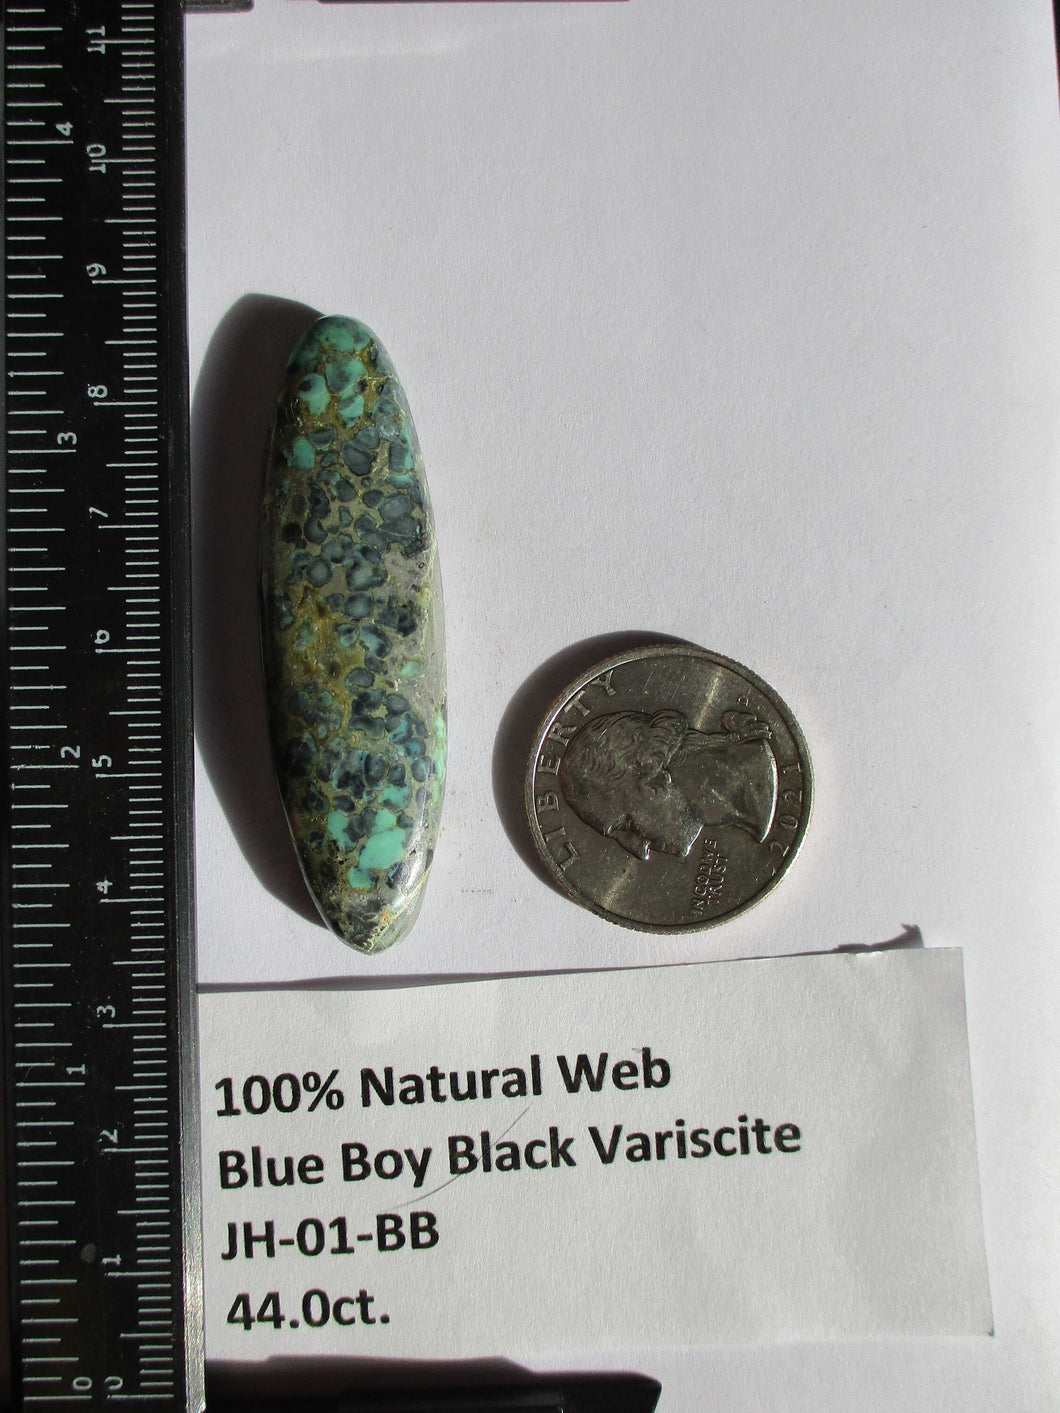 44.0 ct. (53x15.5x7 mm) Natural Blue Boy Black Variscite Cabochon Gemstone, # JH 01